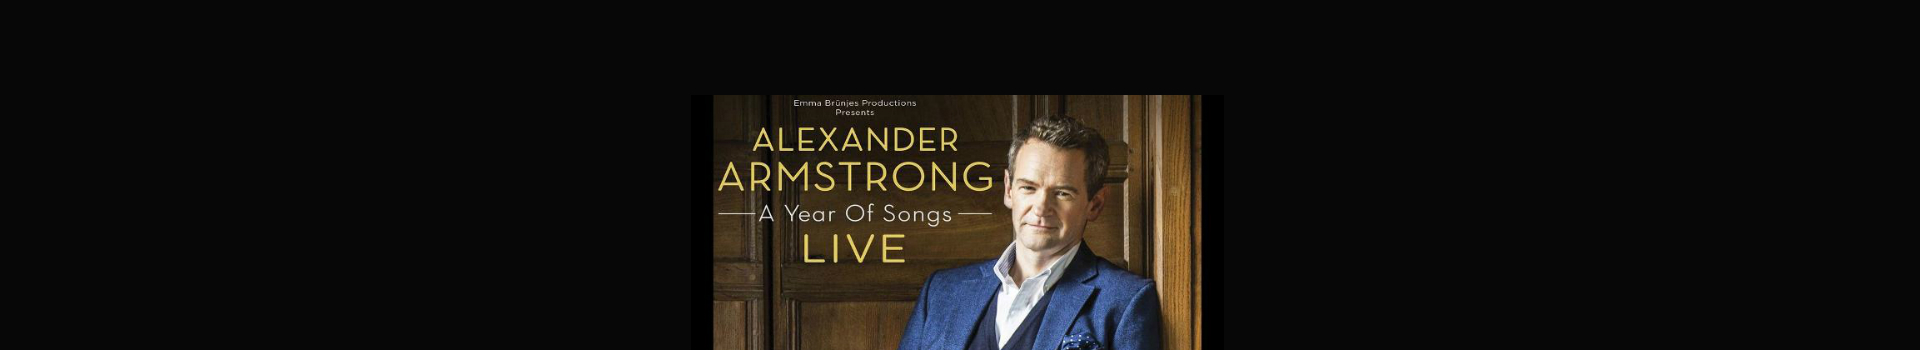 Alexander Armstrong tickets London